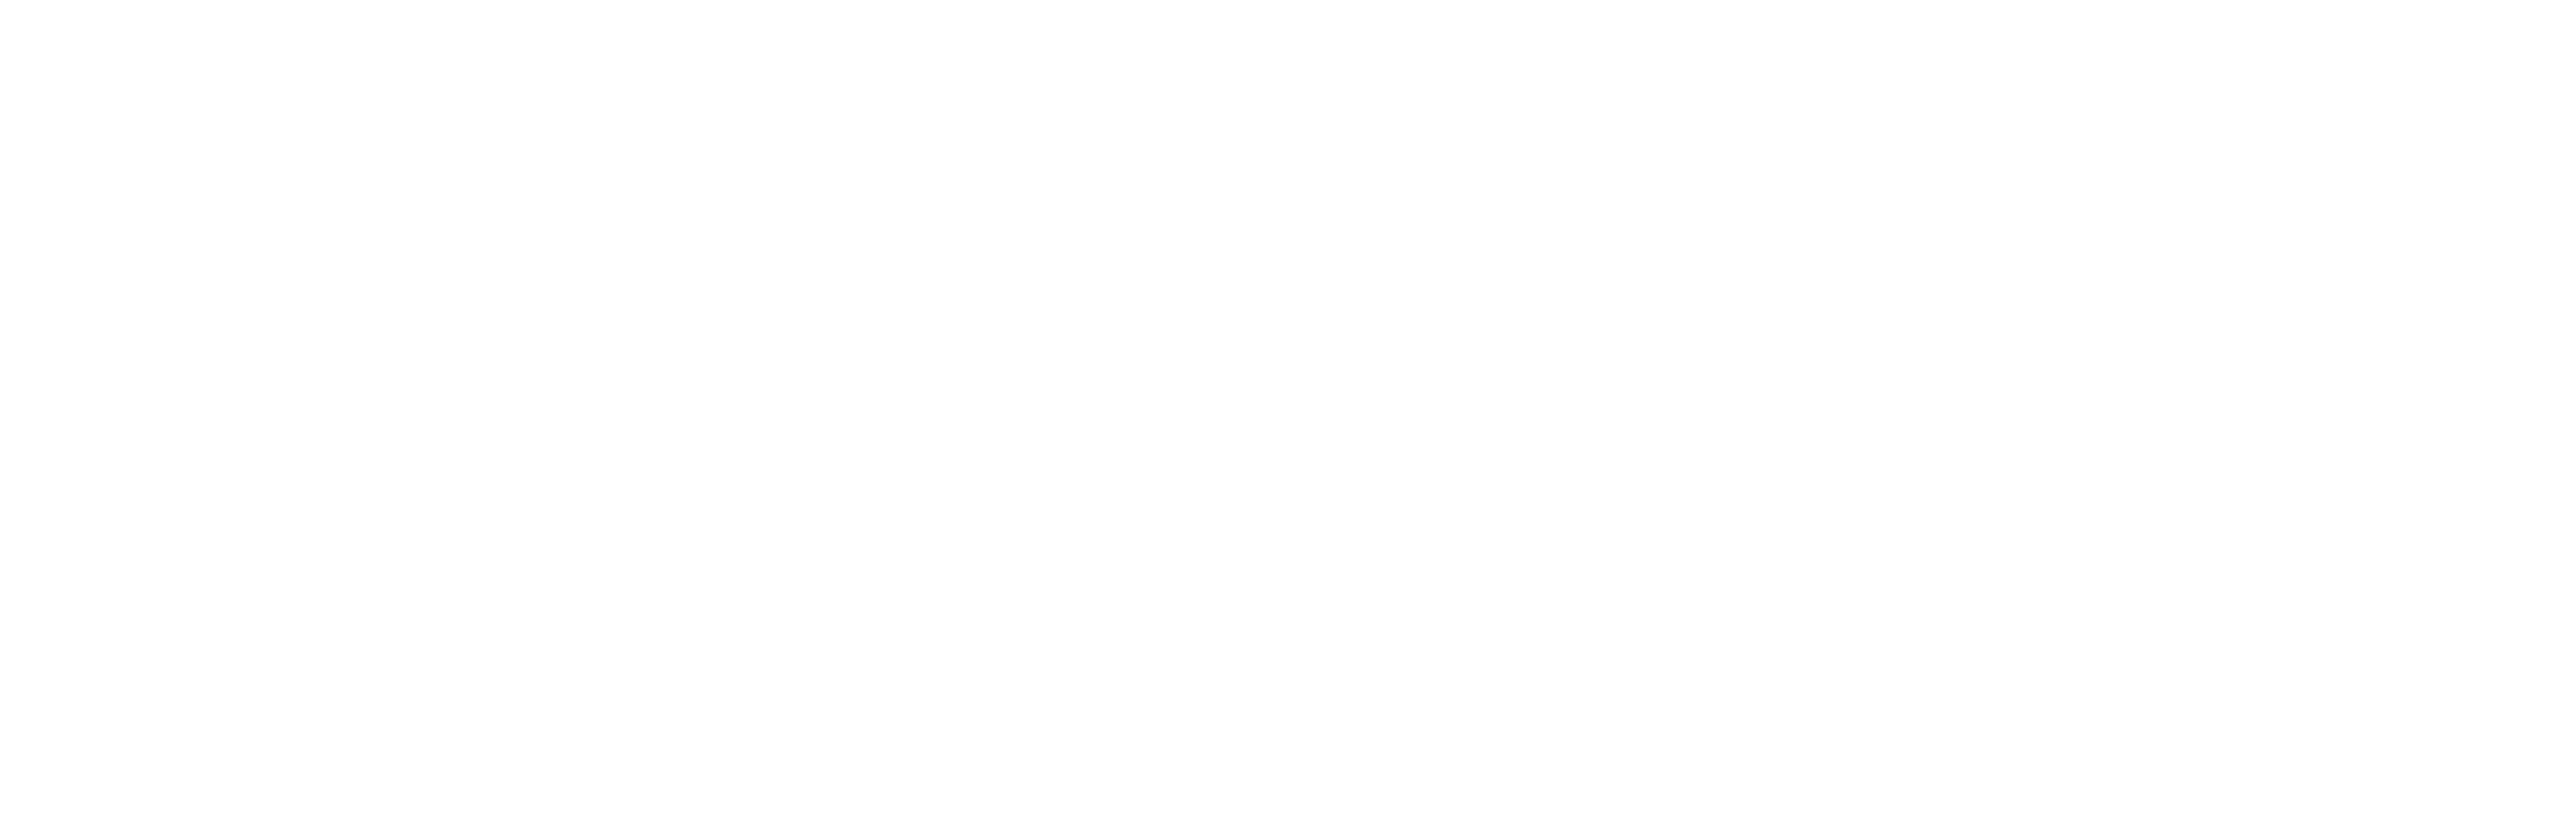 Vibe Kayaks Limited Lifetime Warranty